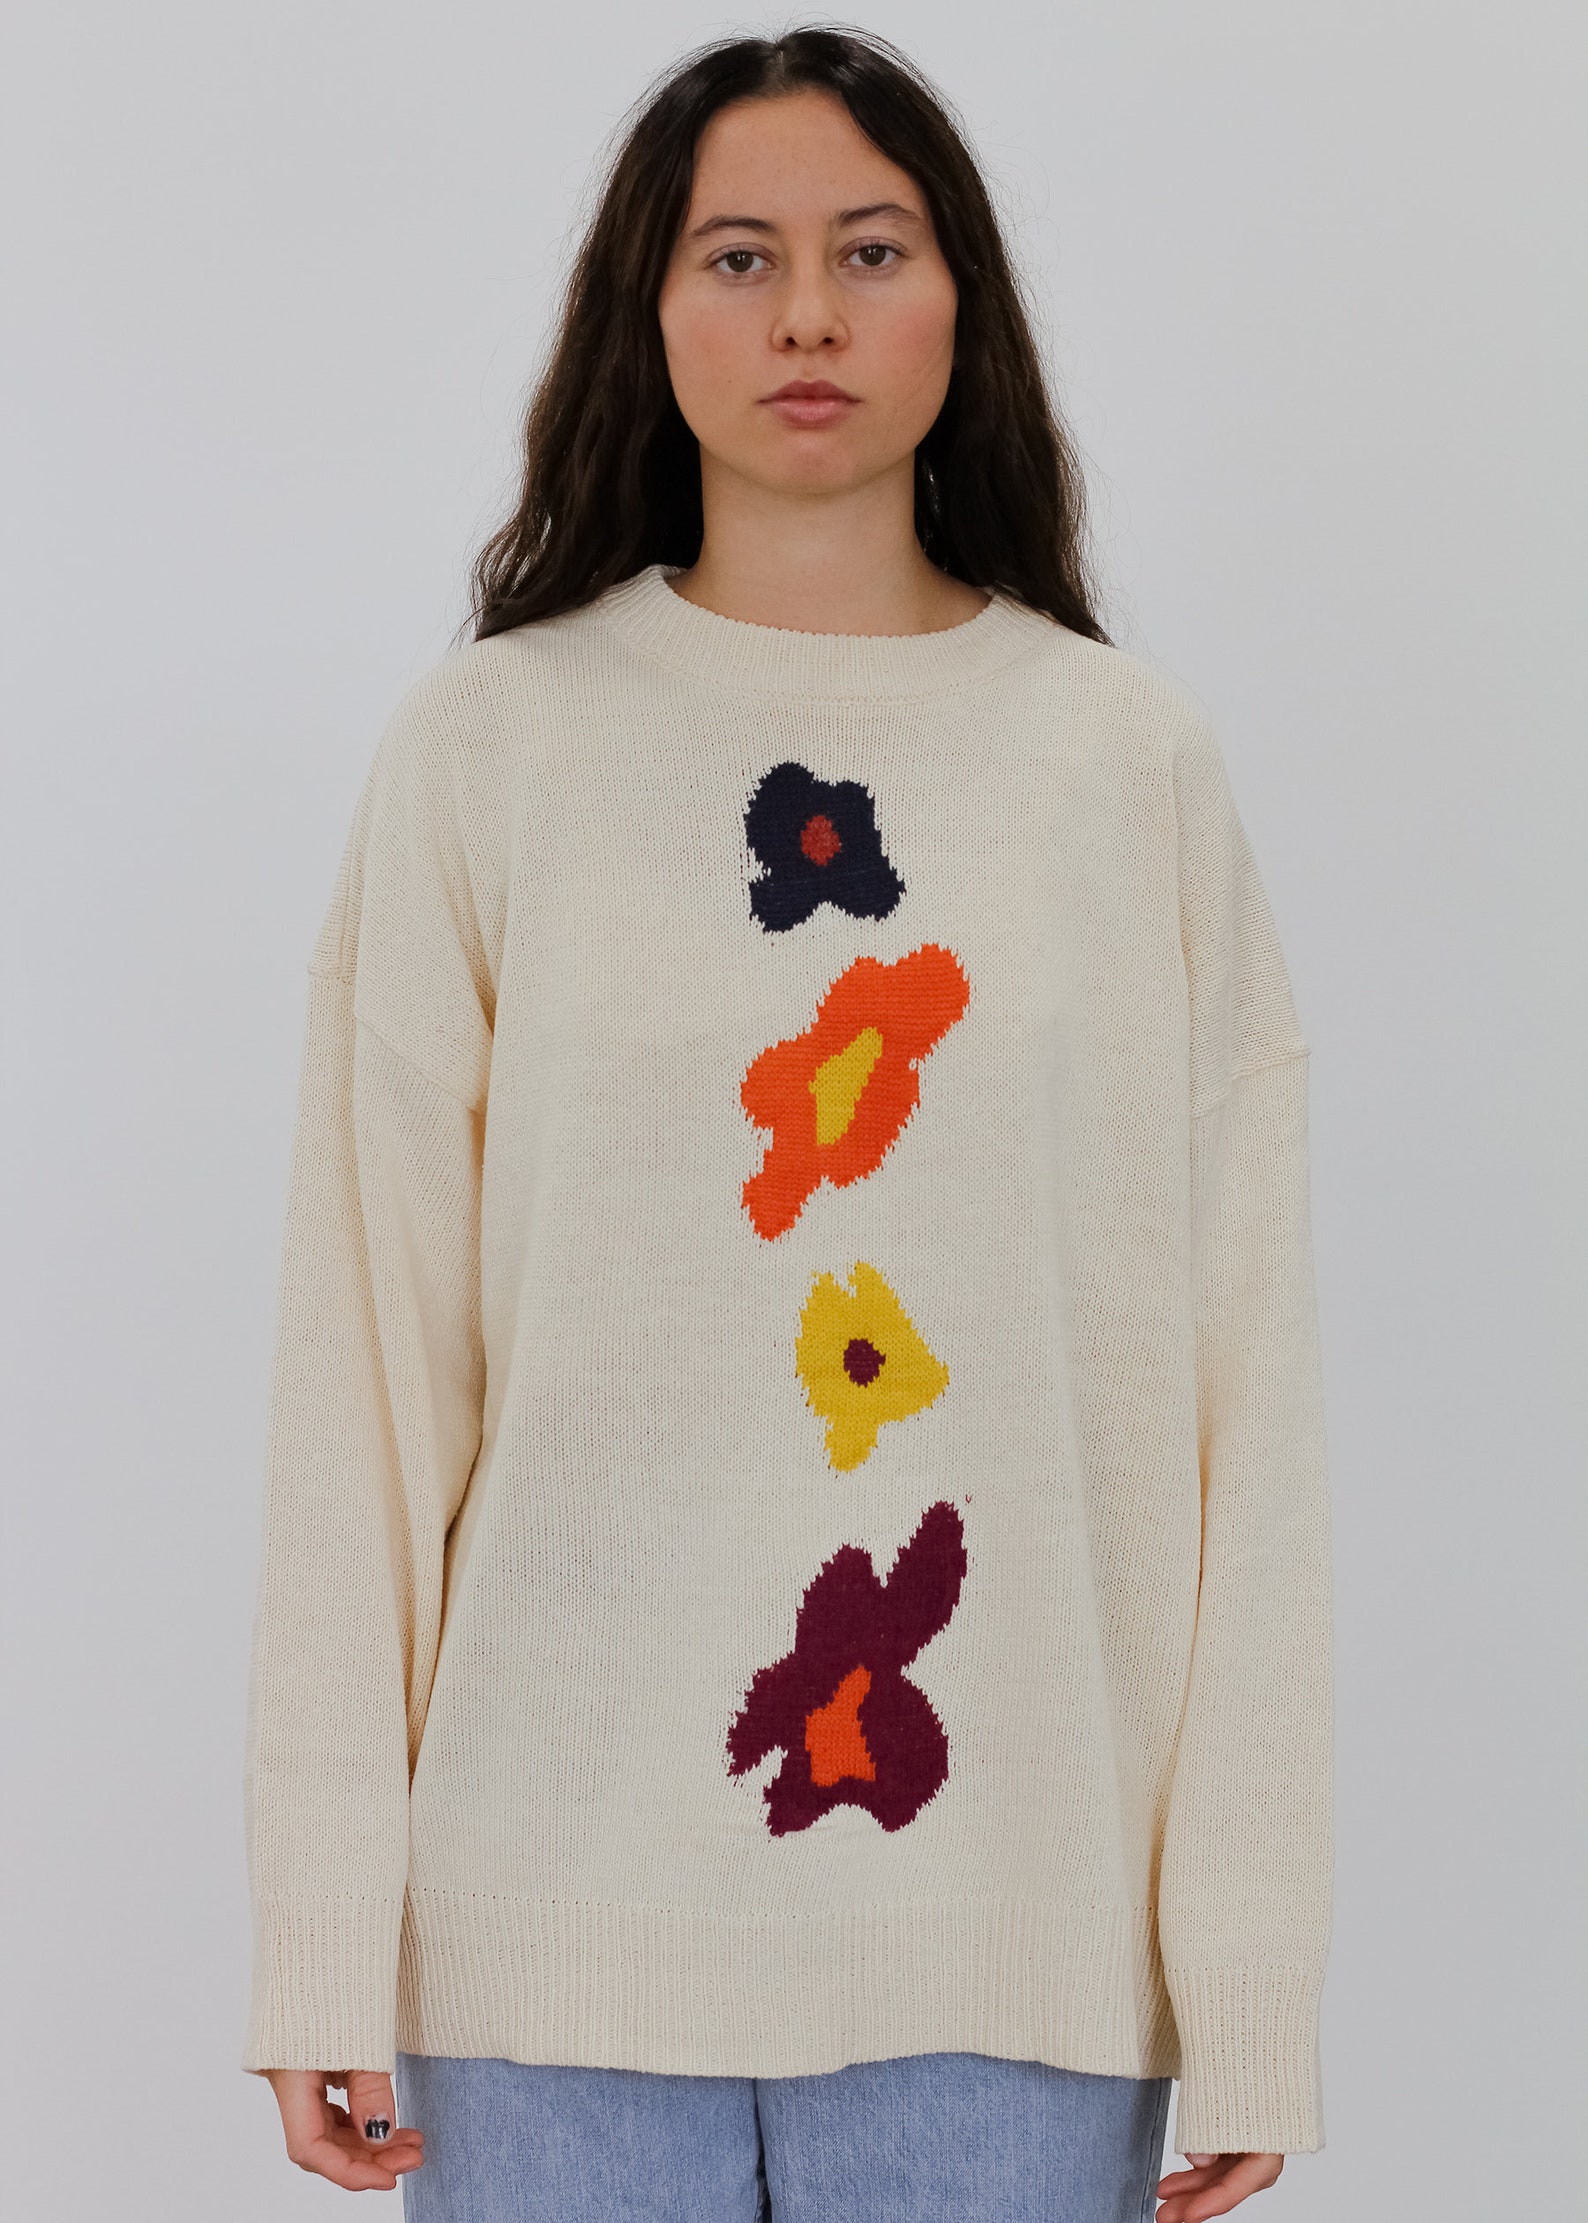 Flower Power Sweater - Etsy